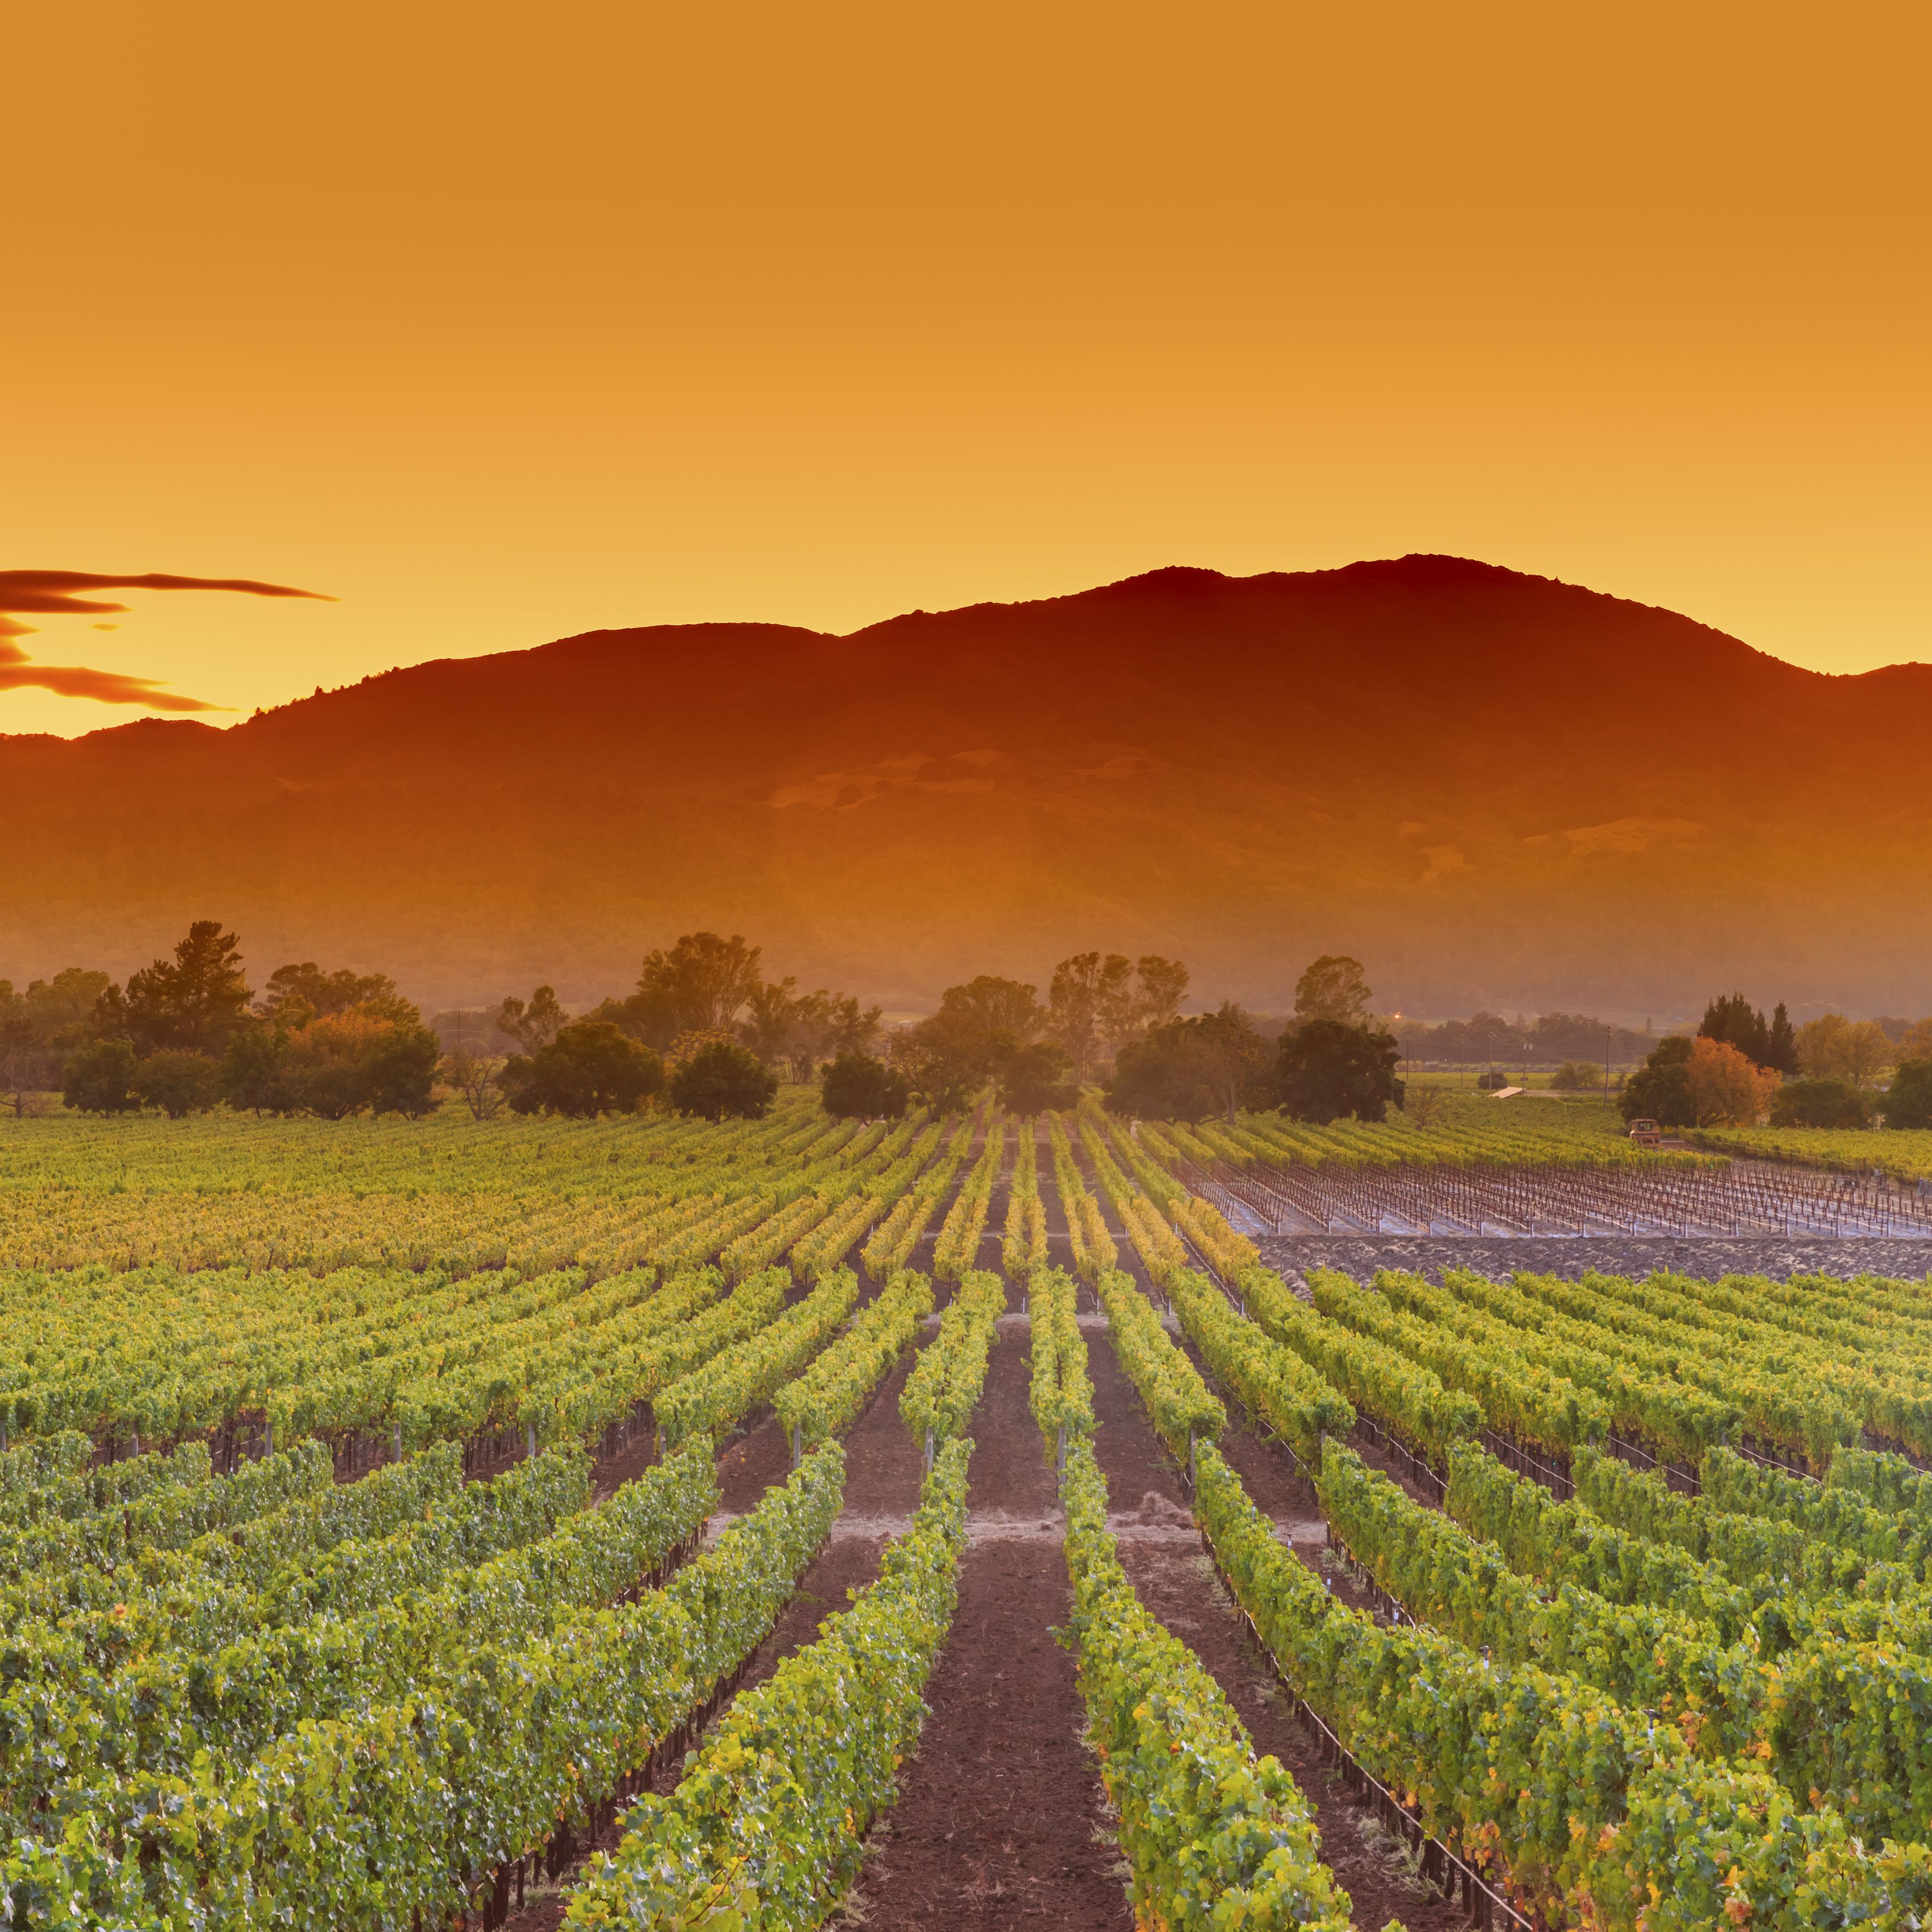 napa-valley-california-wine-country-vineyard-field-harvest-for-winery-494416494-28b52eb2c8ca415a93be31caa5bba097.jpg